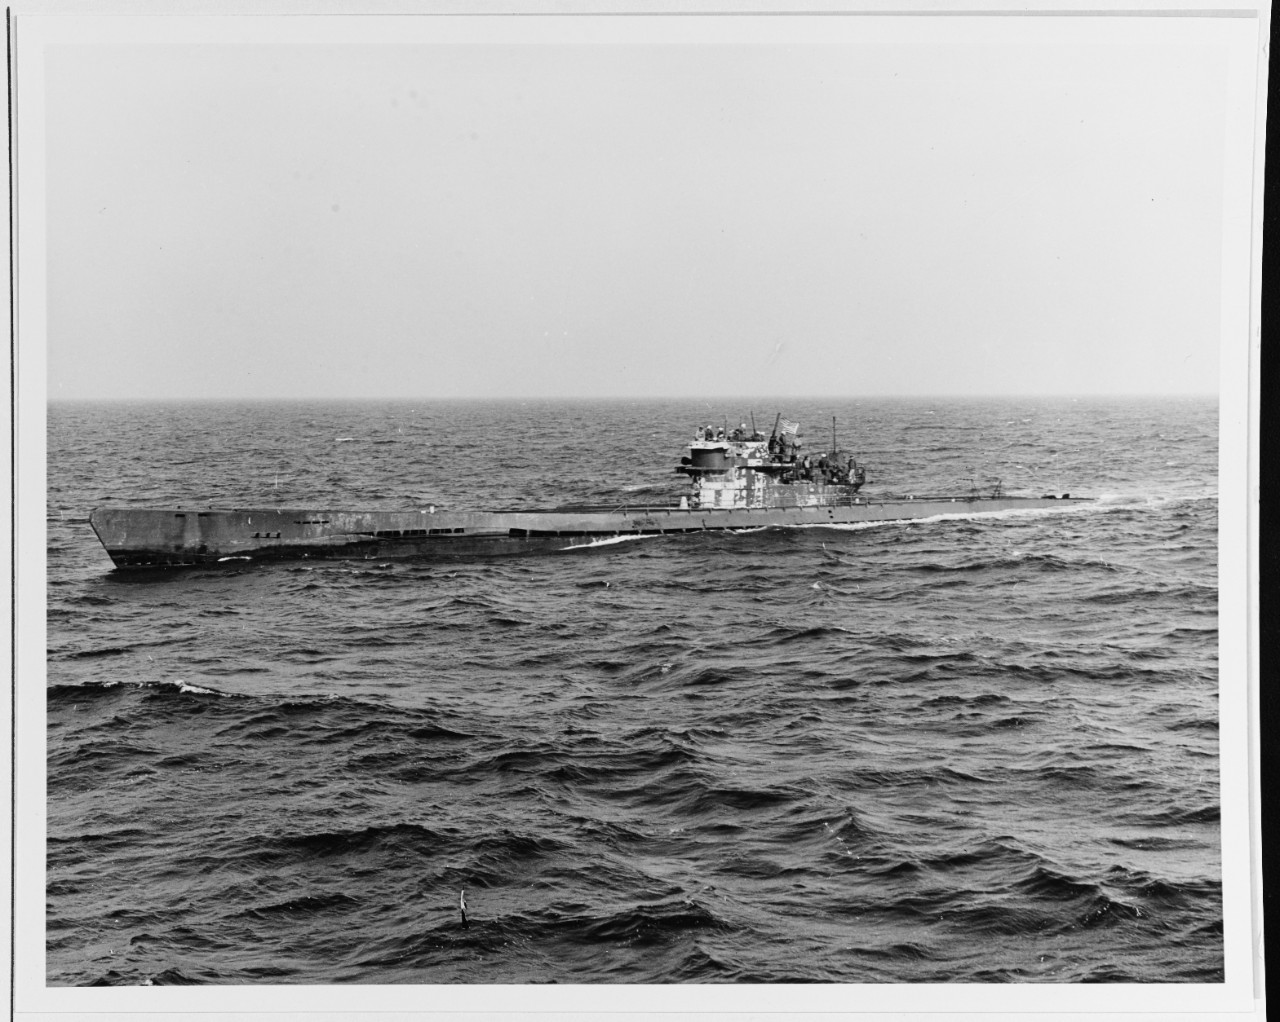 German Submarine U-805